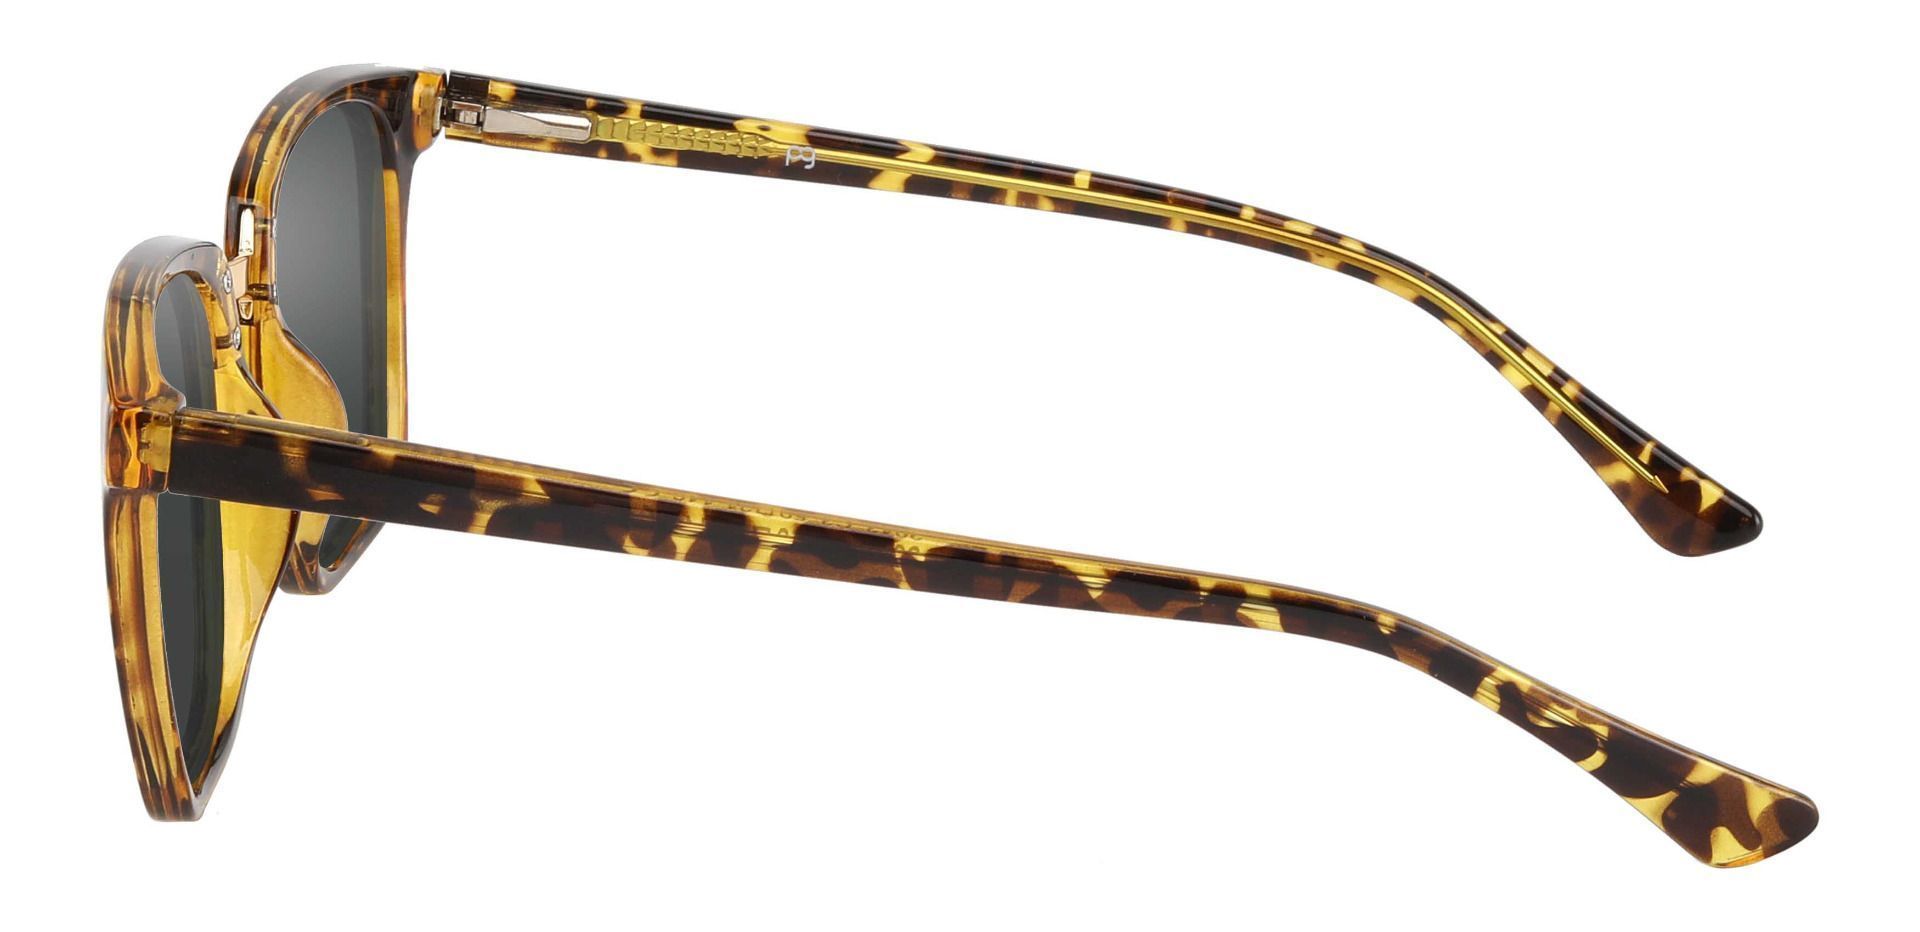 Delta Square Non-Rx Sunglasses - Tortoise Frame With Gray Lenses